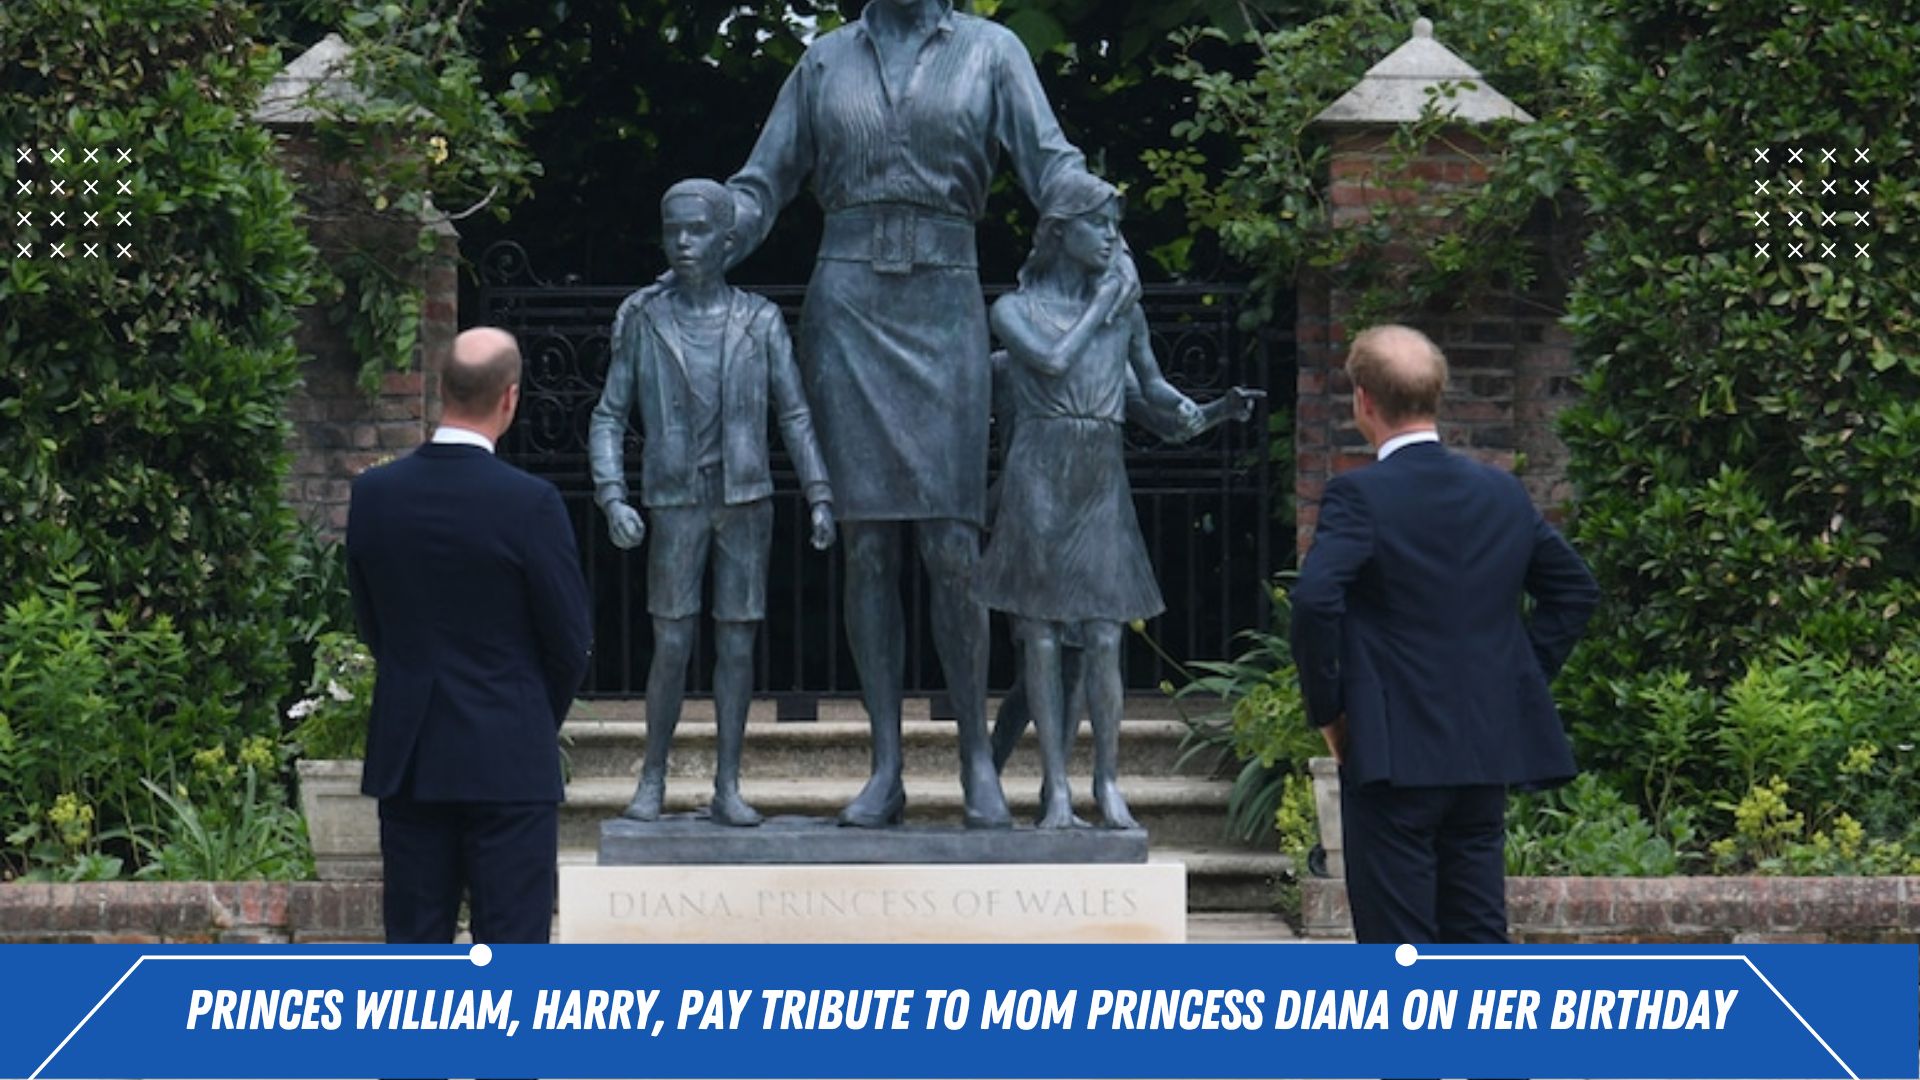 Princes William, Harry, pay tribute to mom Princess Diana on her birthday